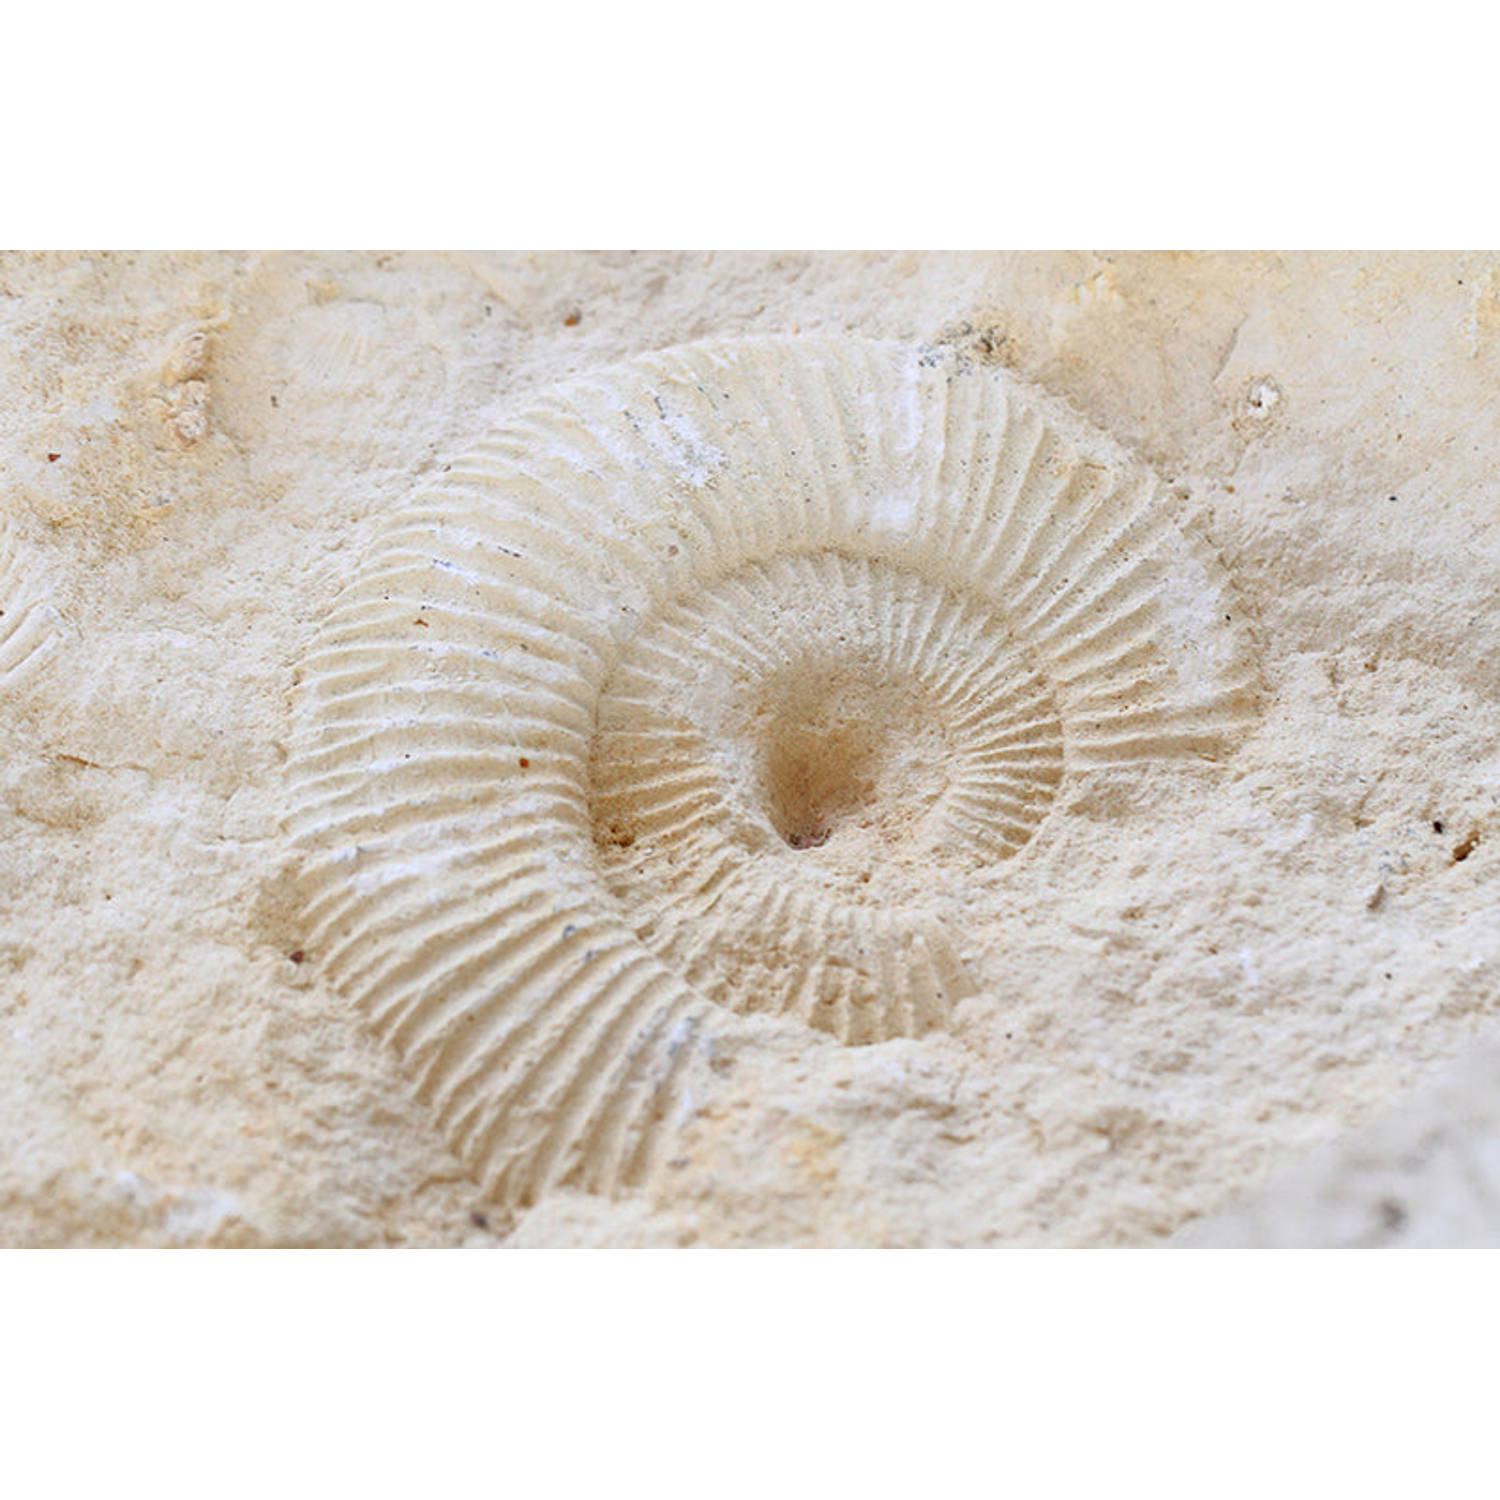 Inductiebeschermer - Ammonites Fossil - 60x50 cm - Inductiebeschermer - Inductie Afdekplaat Kookplaat - Inductie Mat - Anti-Slip - Keuken Decoratie - Keuken Accessoires